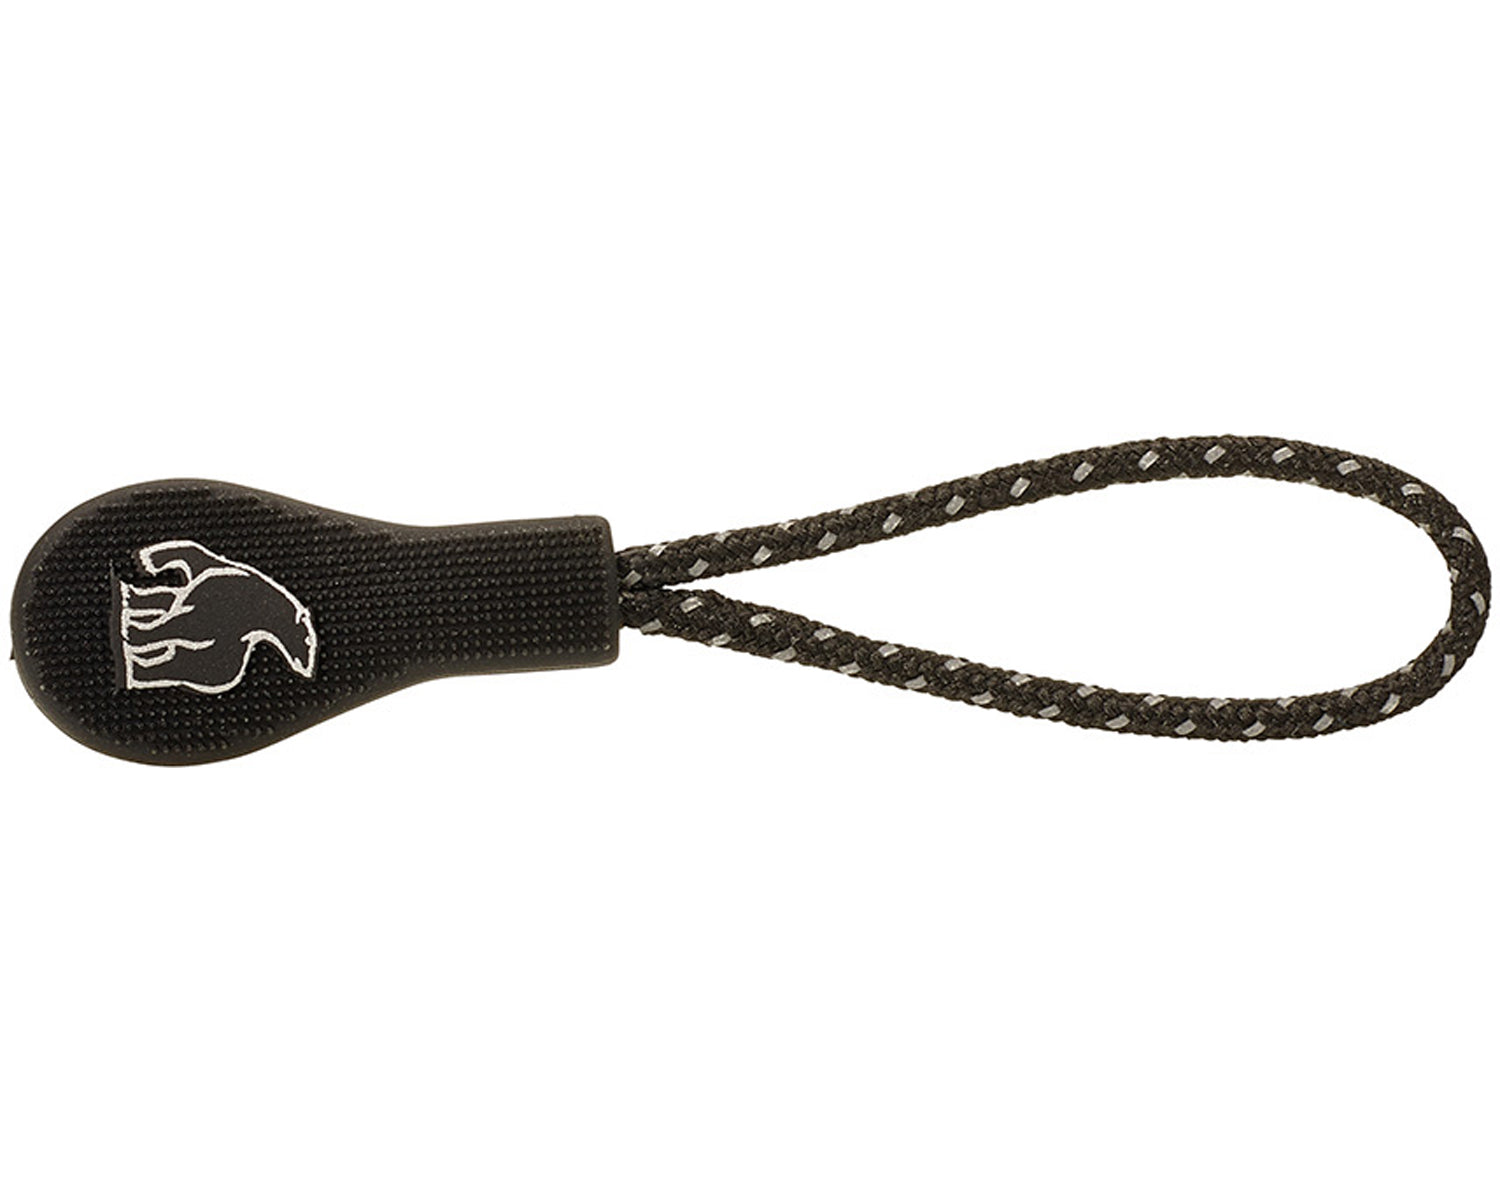 Zipper puller - Black